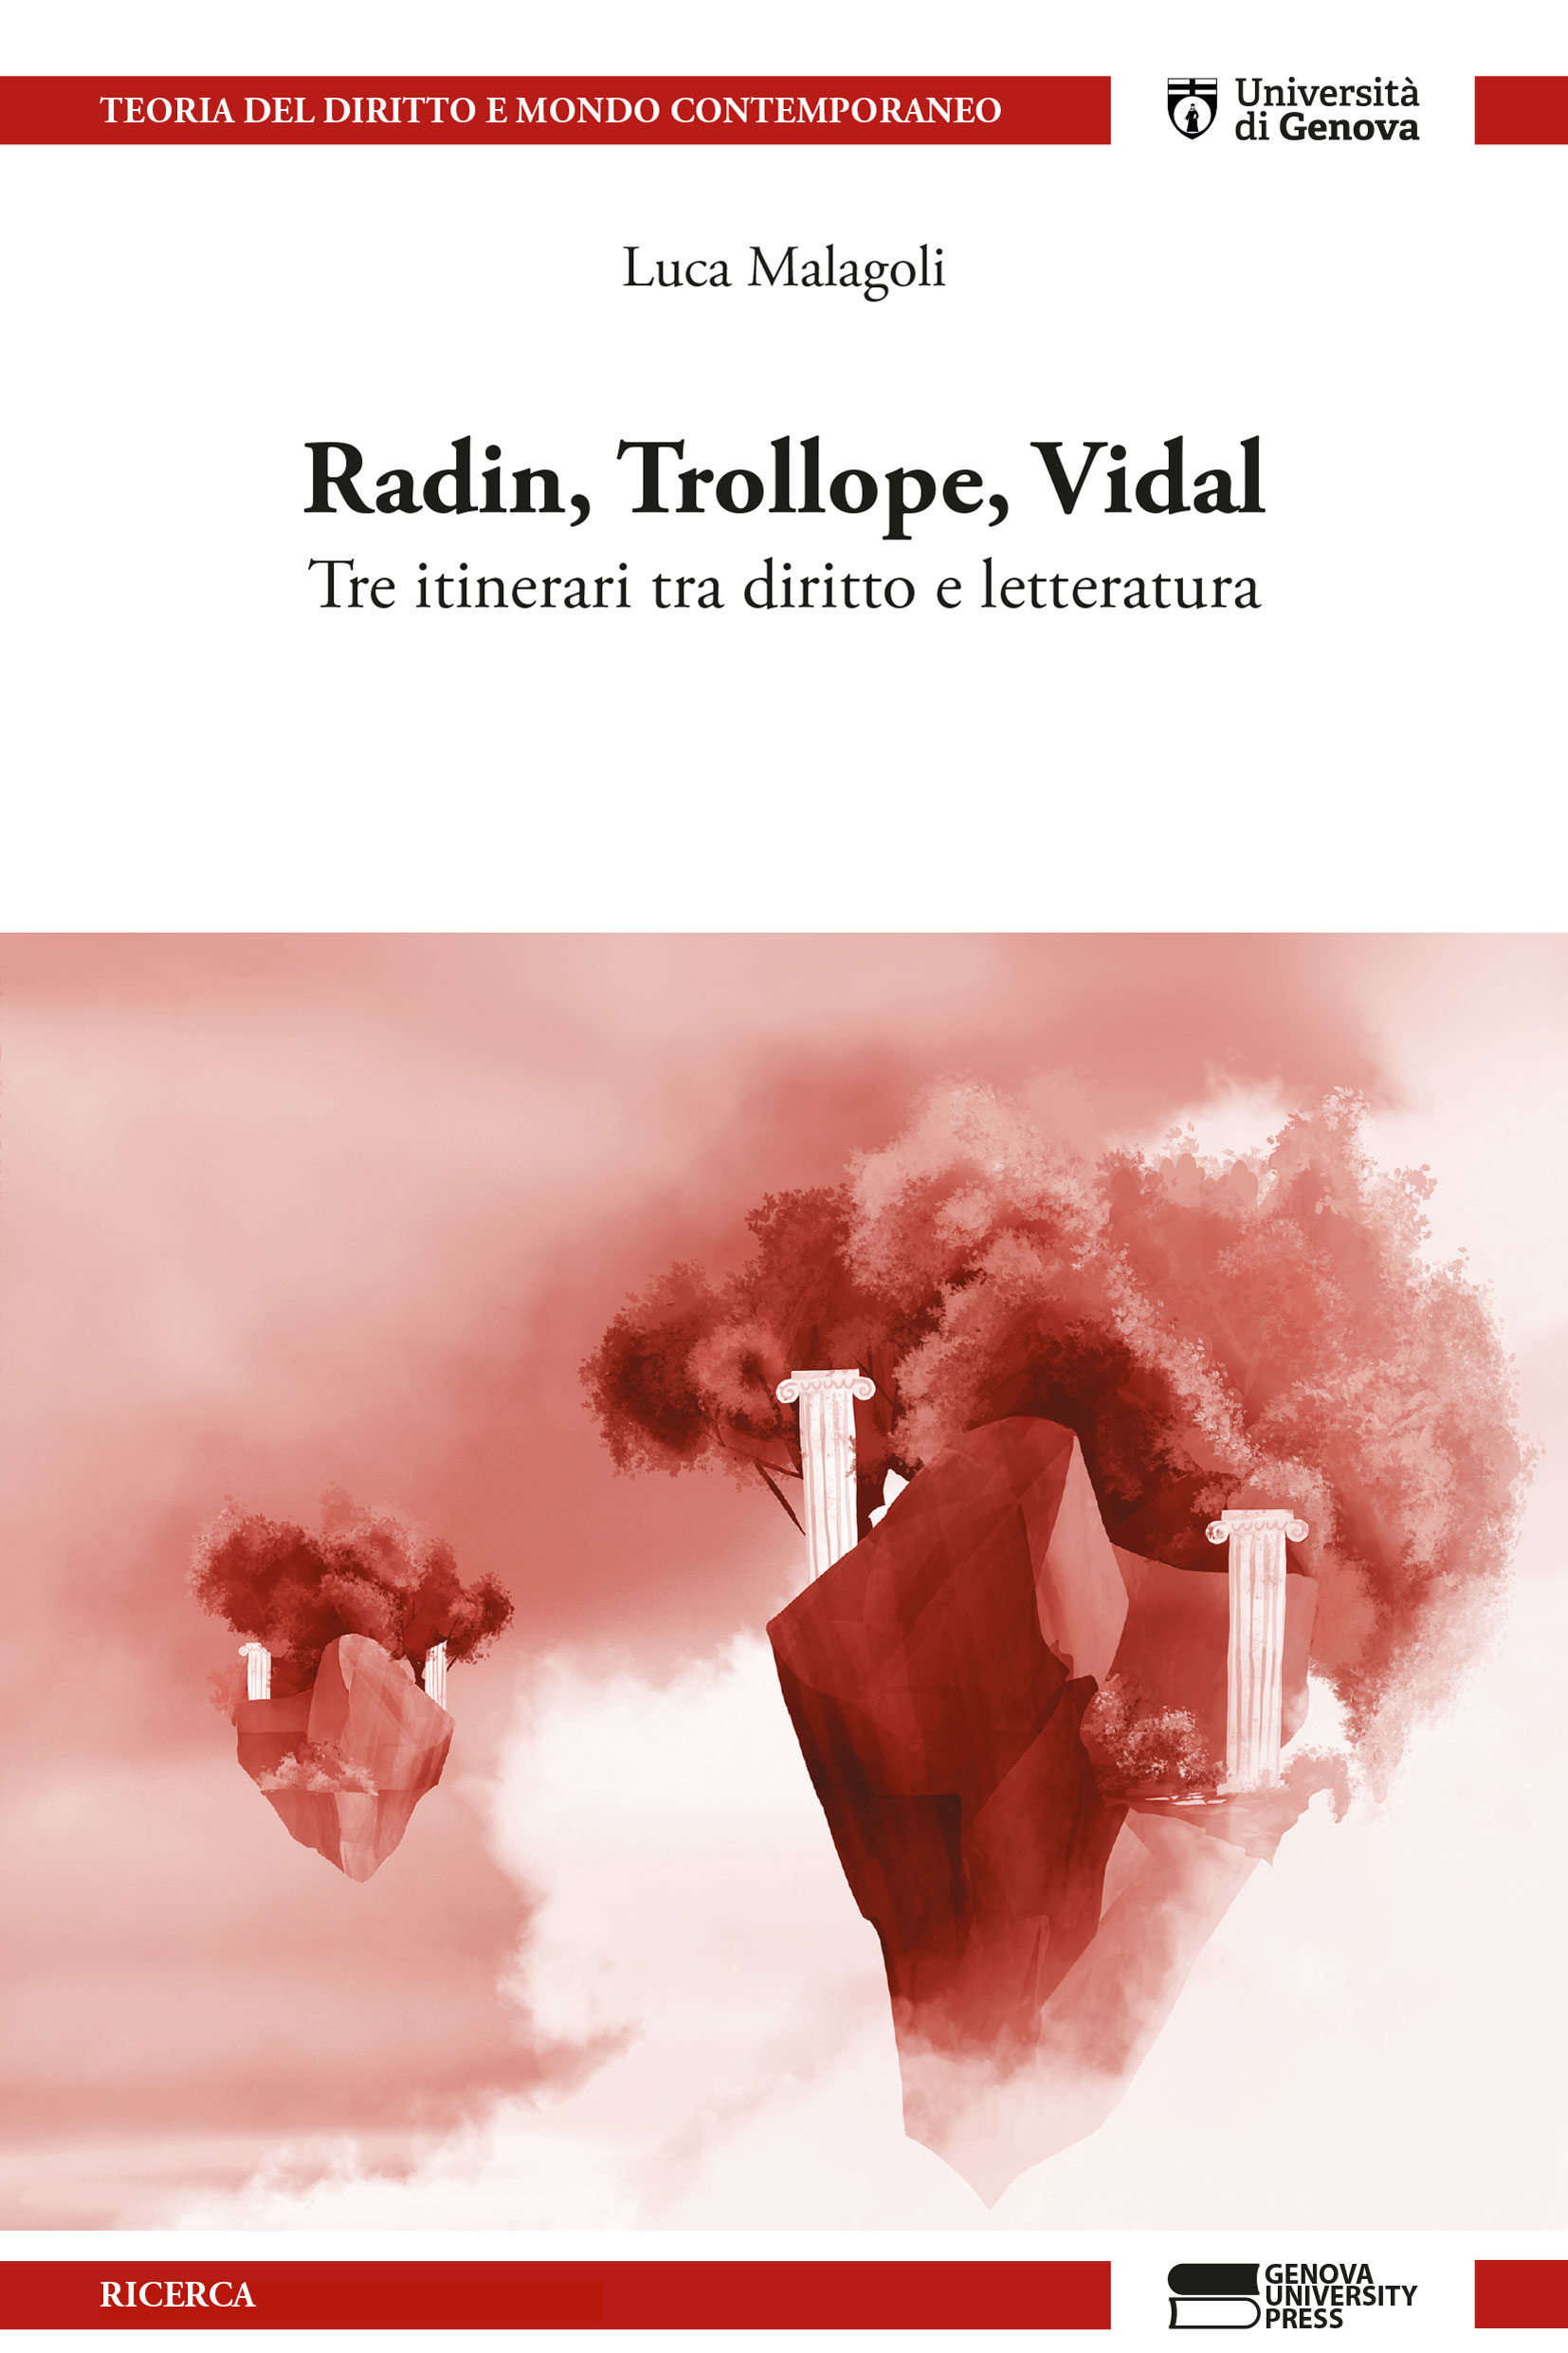 Radin, Trollope, Vidal